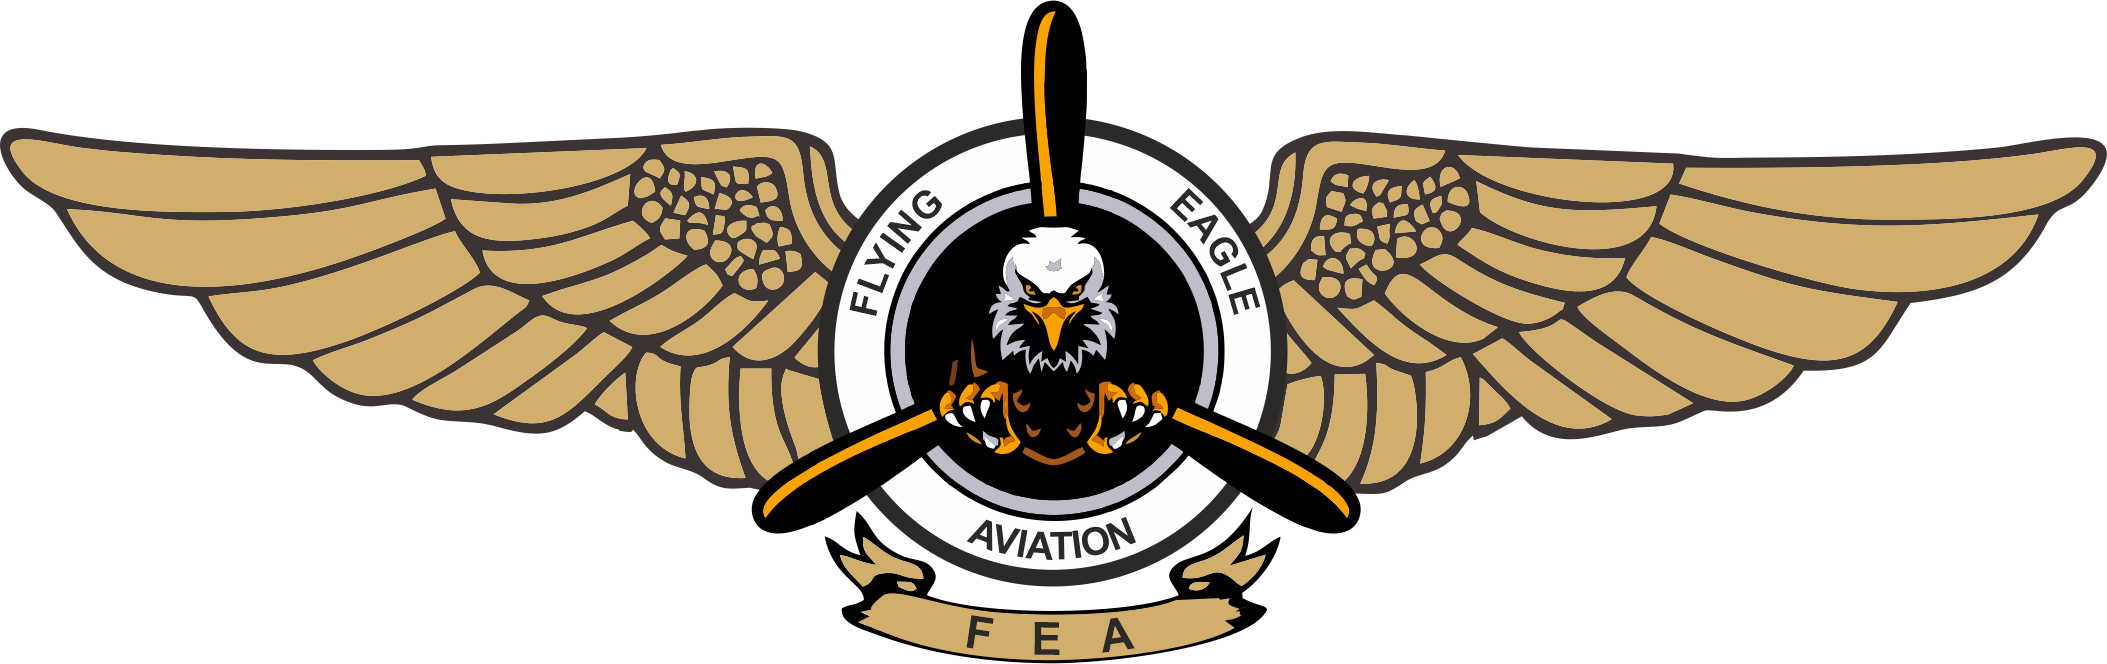  flying eagle aviation logo